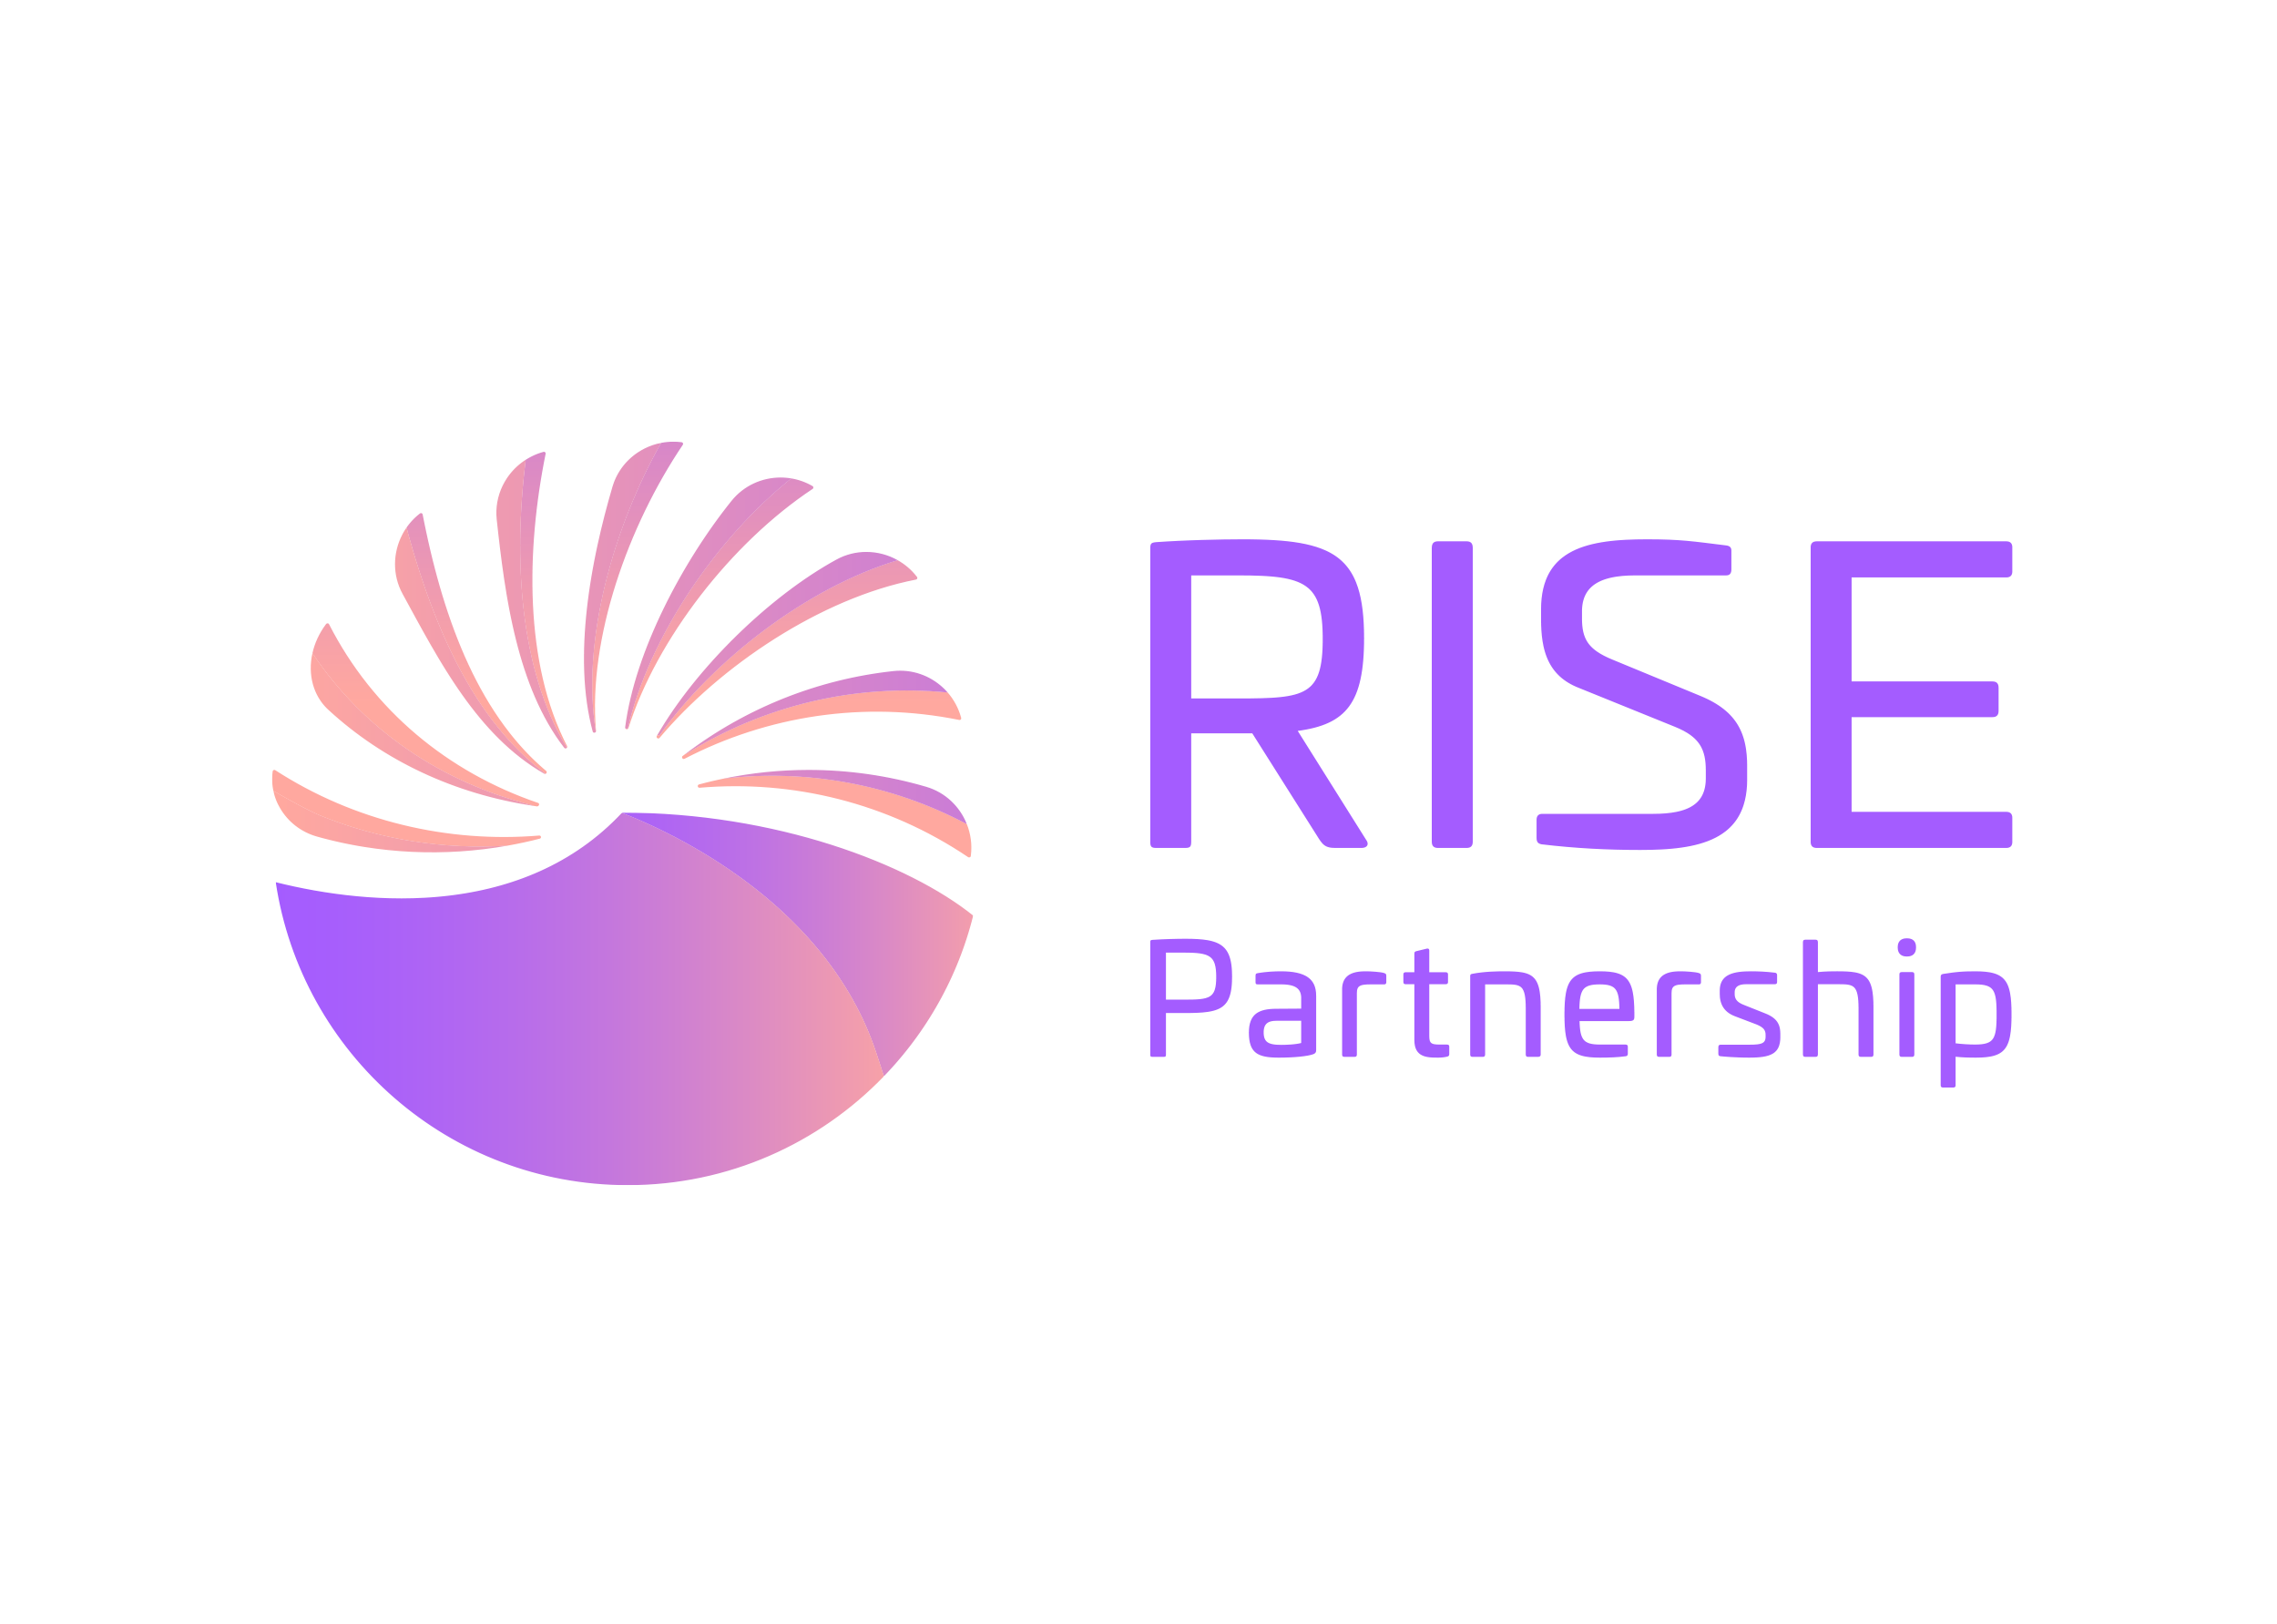 RISE Partnership